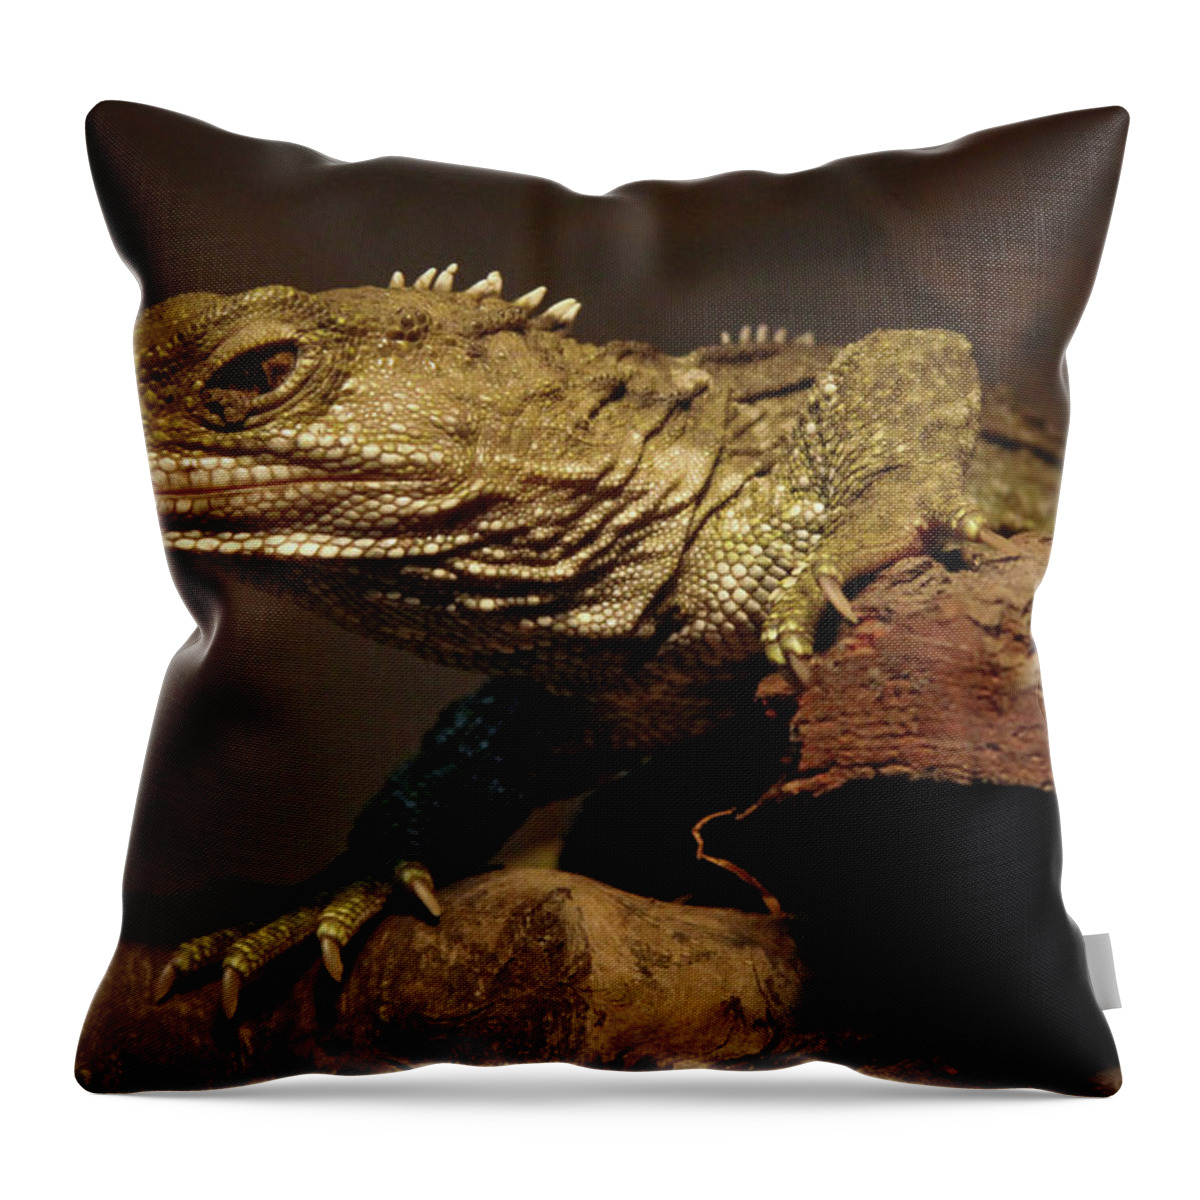 Animal Themes Throw Pillow featuring the photograph Tuatara by Alastair Stewart